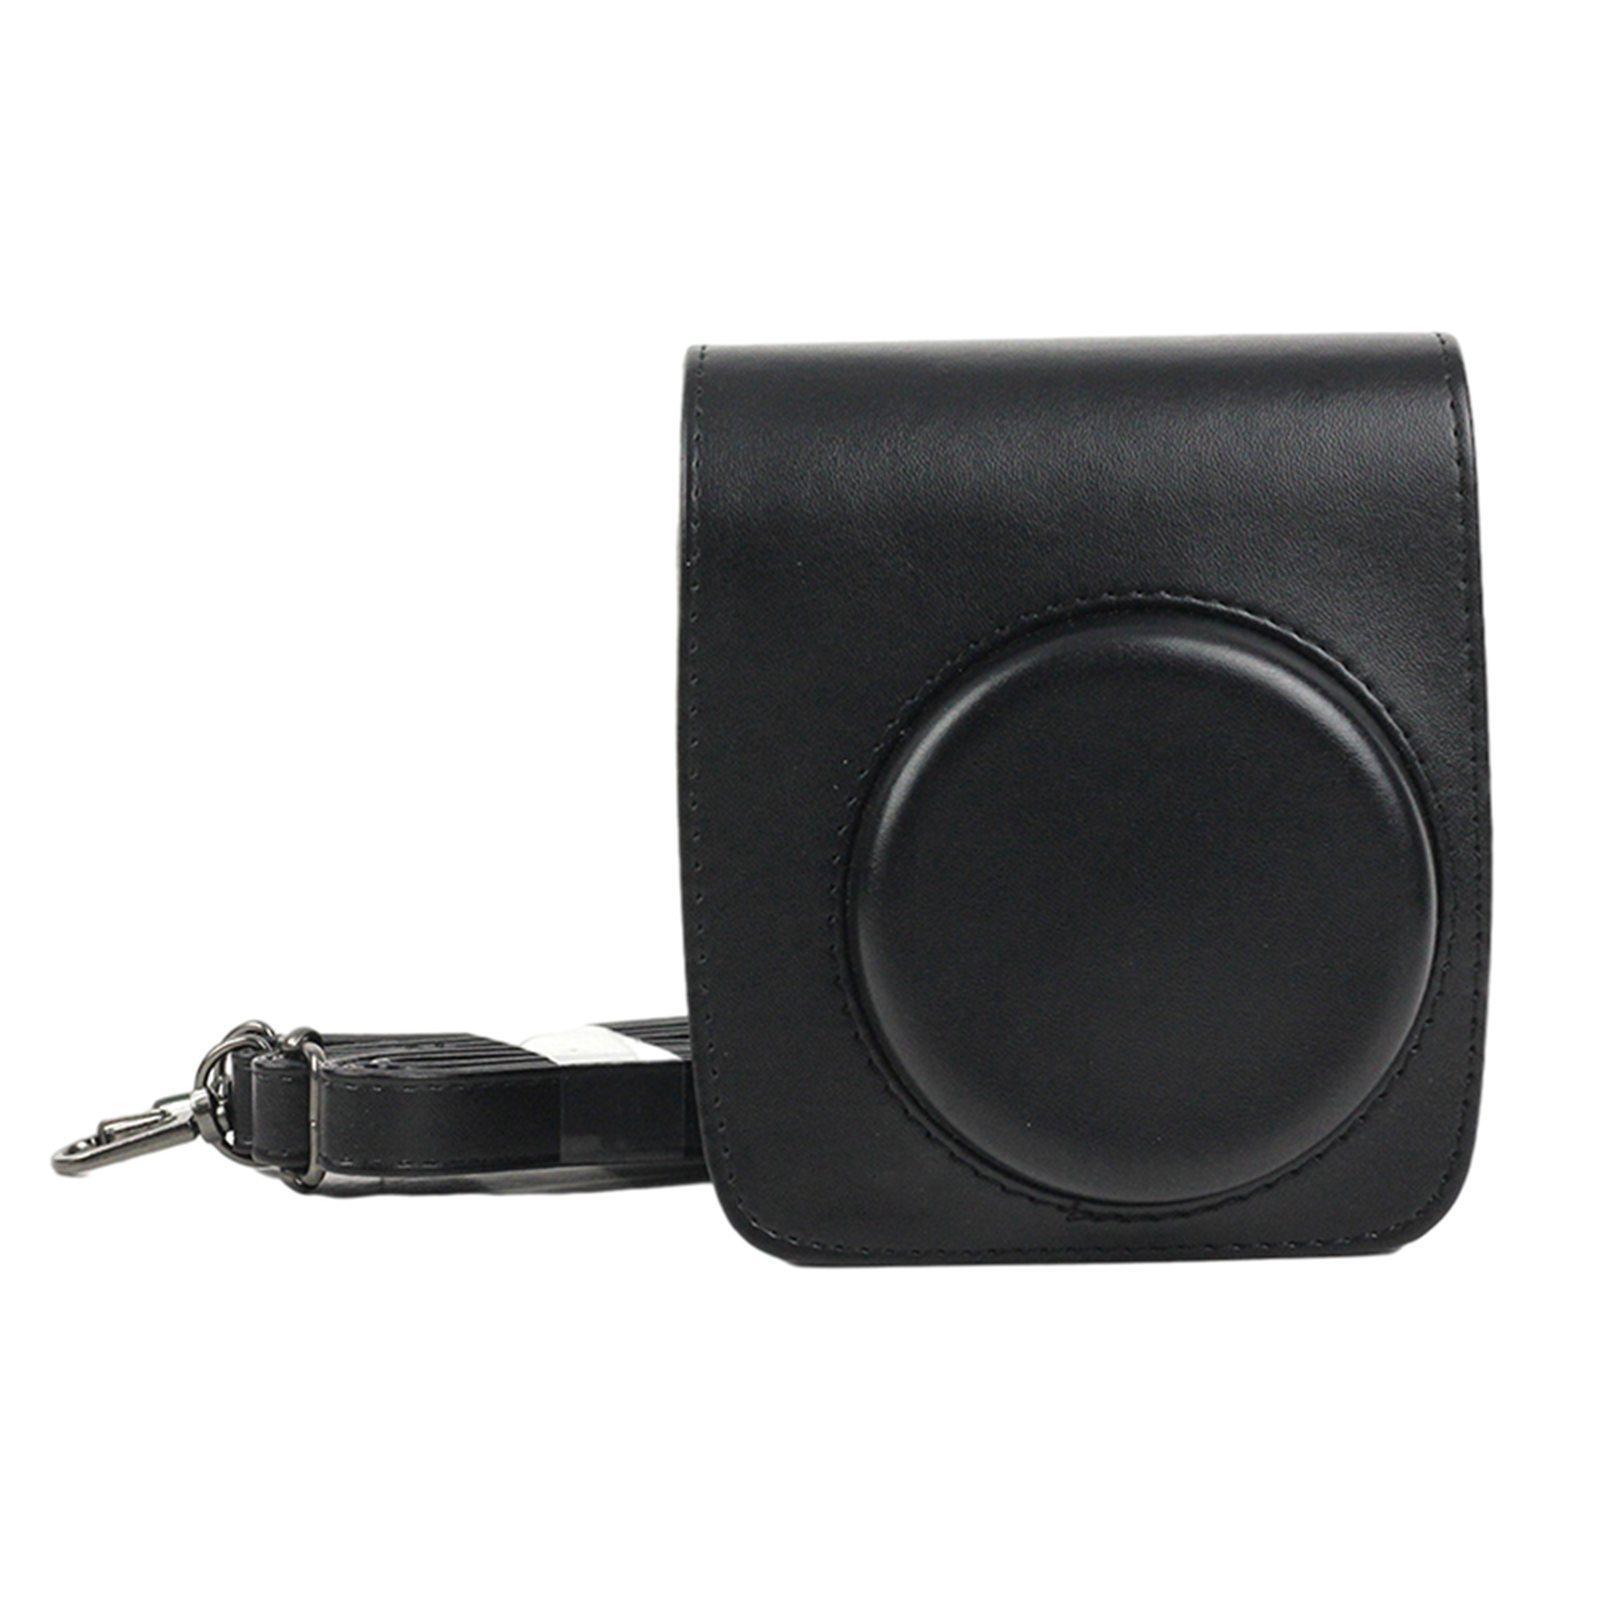 Gazechimp Retro Camera Protective Case, for Mini 90, Classic PU Leather Cover,